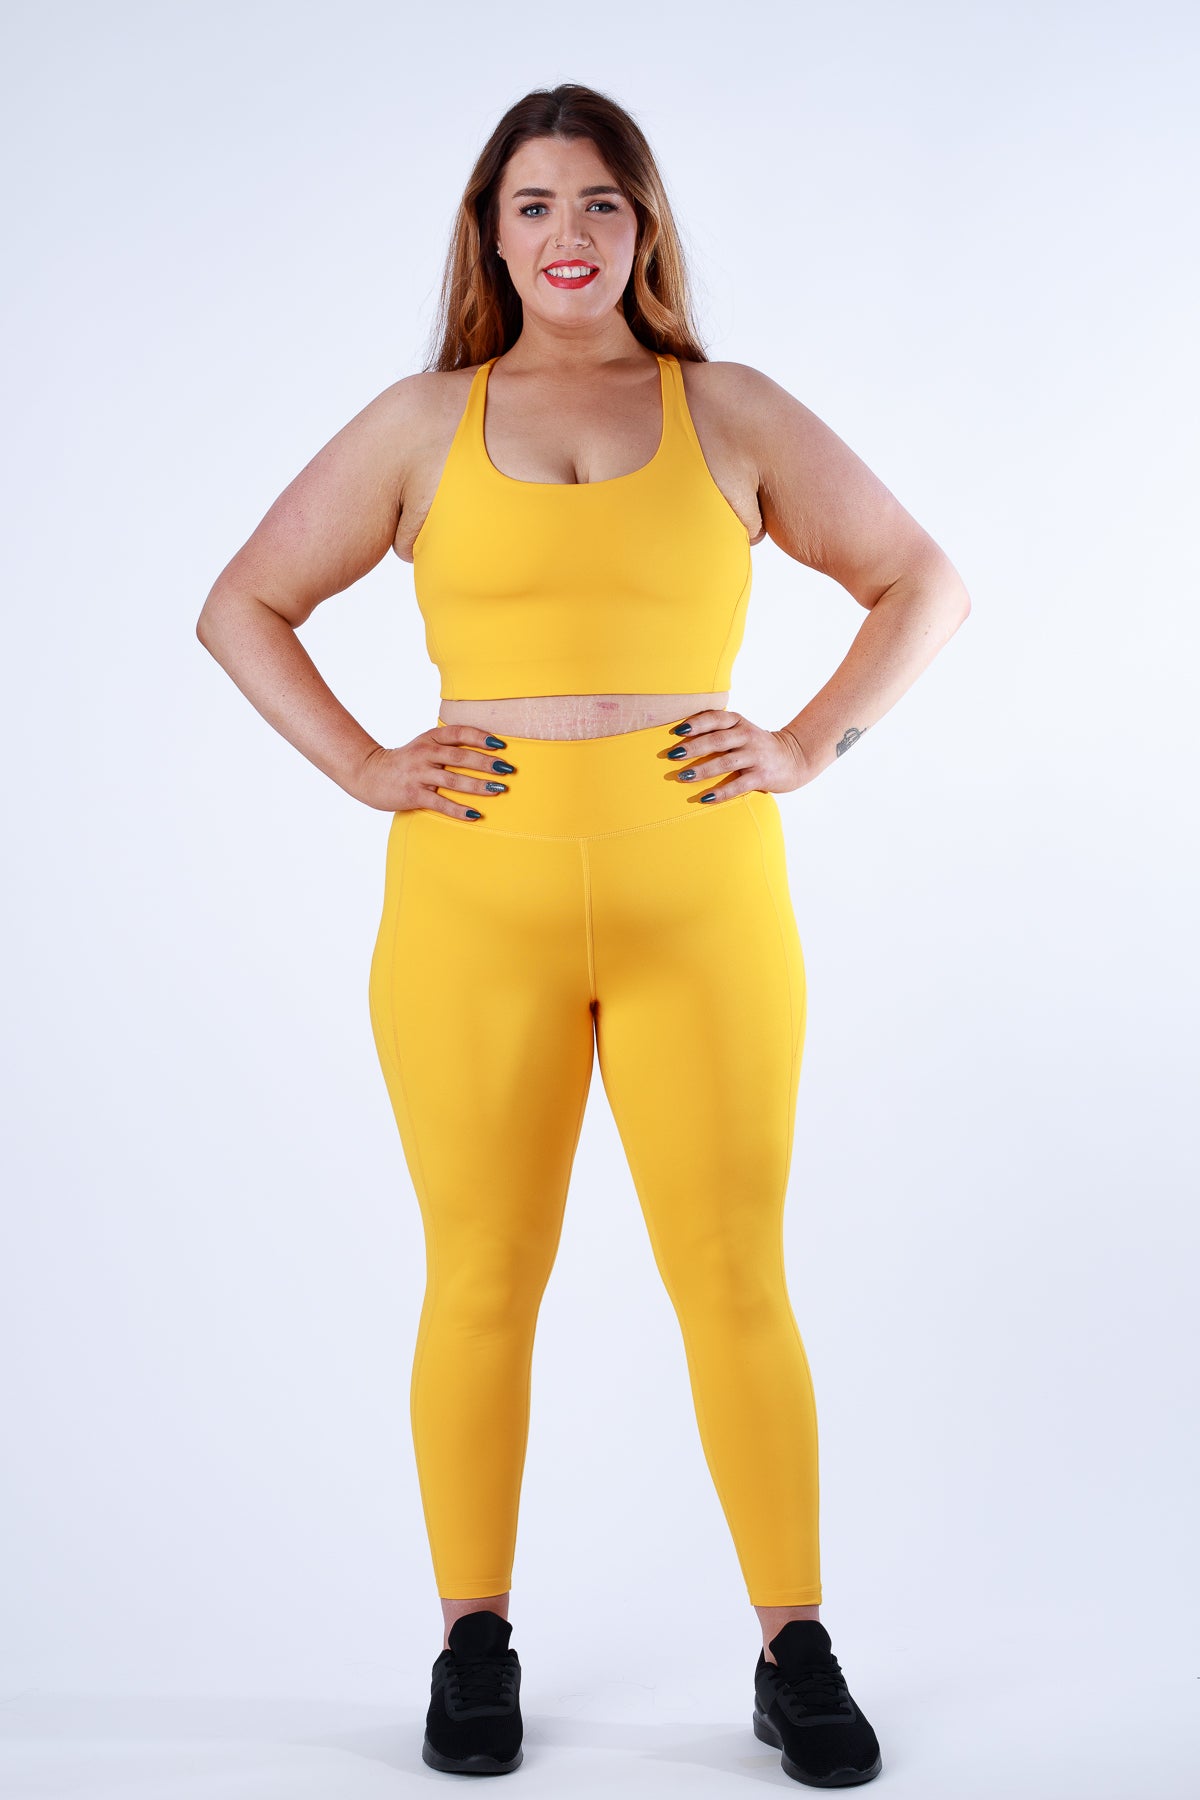 Buy Yellow Leggings for Women by Plus Size Online